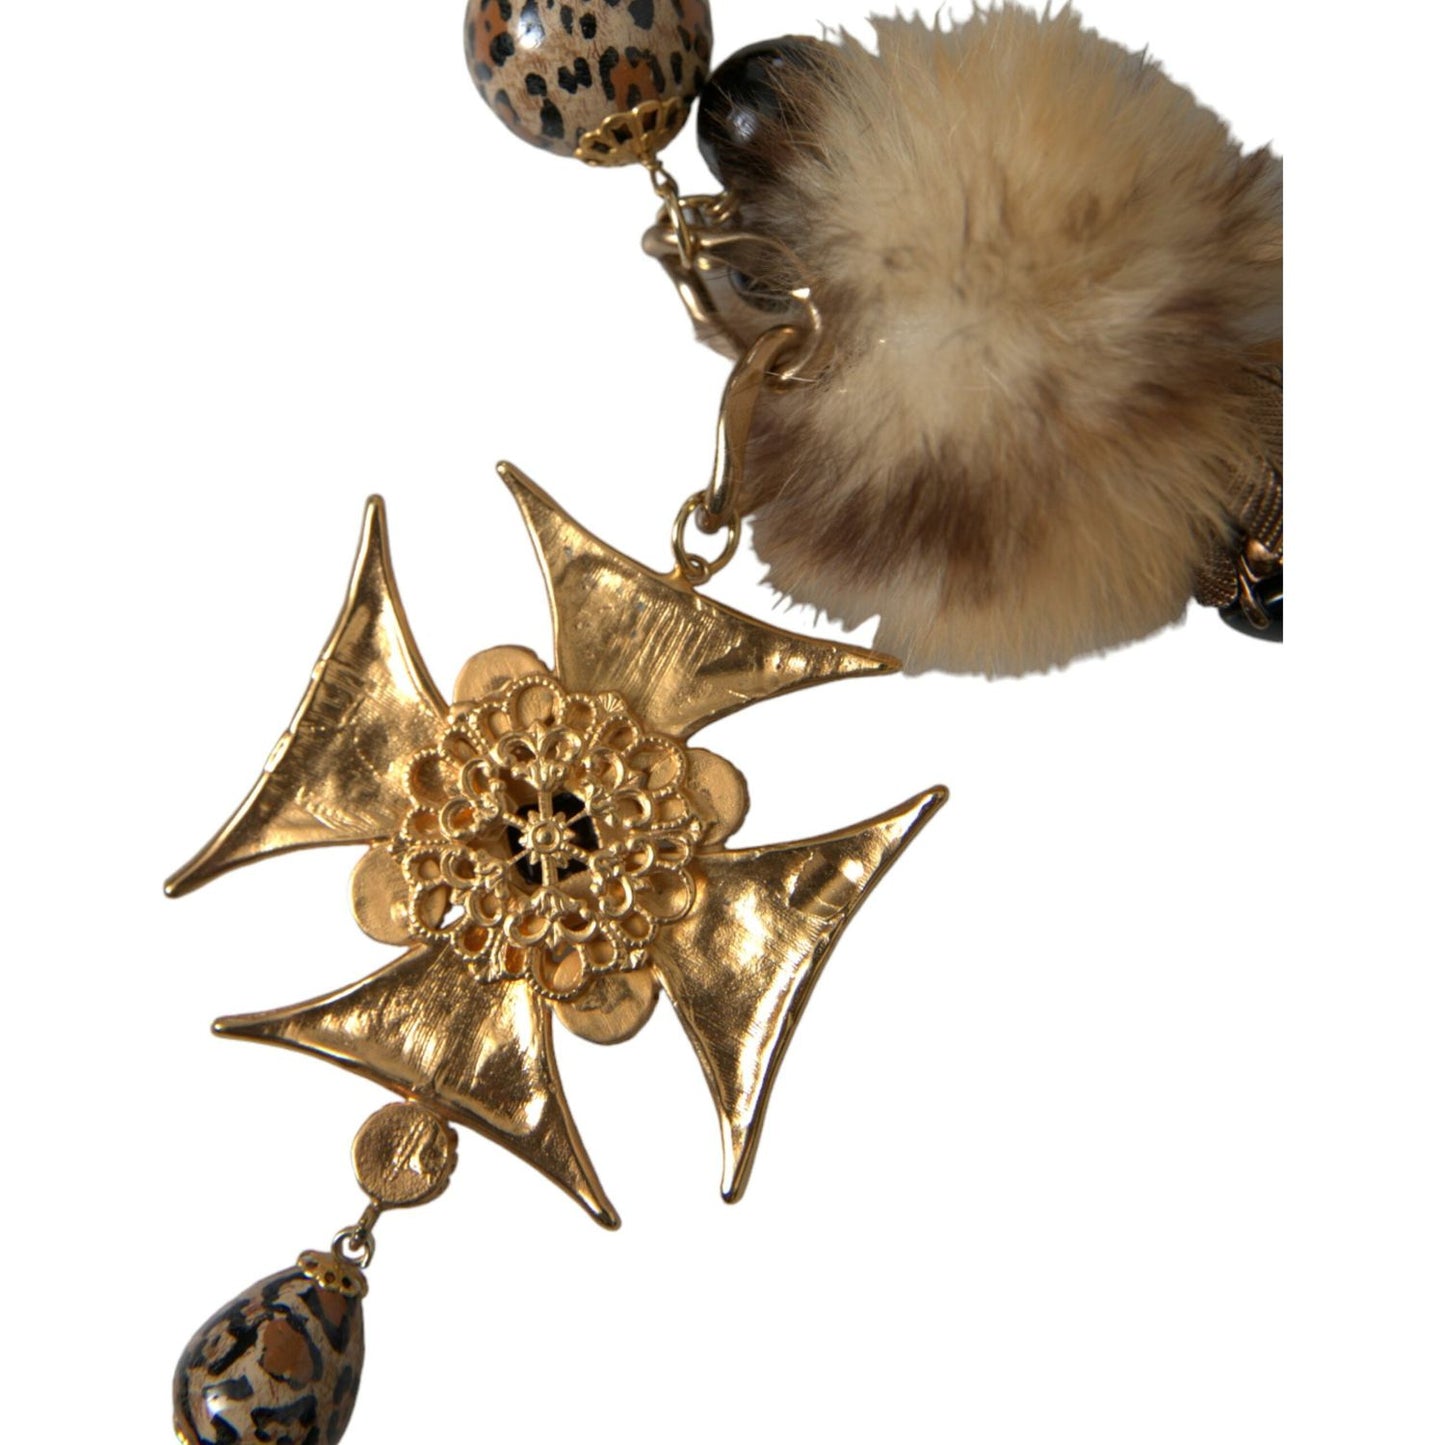 Dolce & Gabbana Gold Black Crystals Lapin Fur Filigree Chocker Necklace gold-black-crystals-lapin-fur-filigree-chocker-necklace